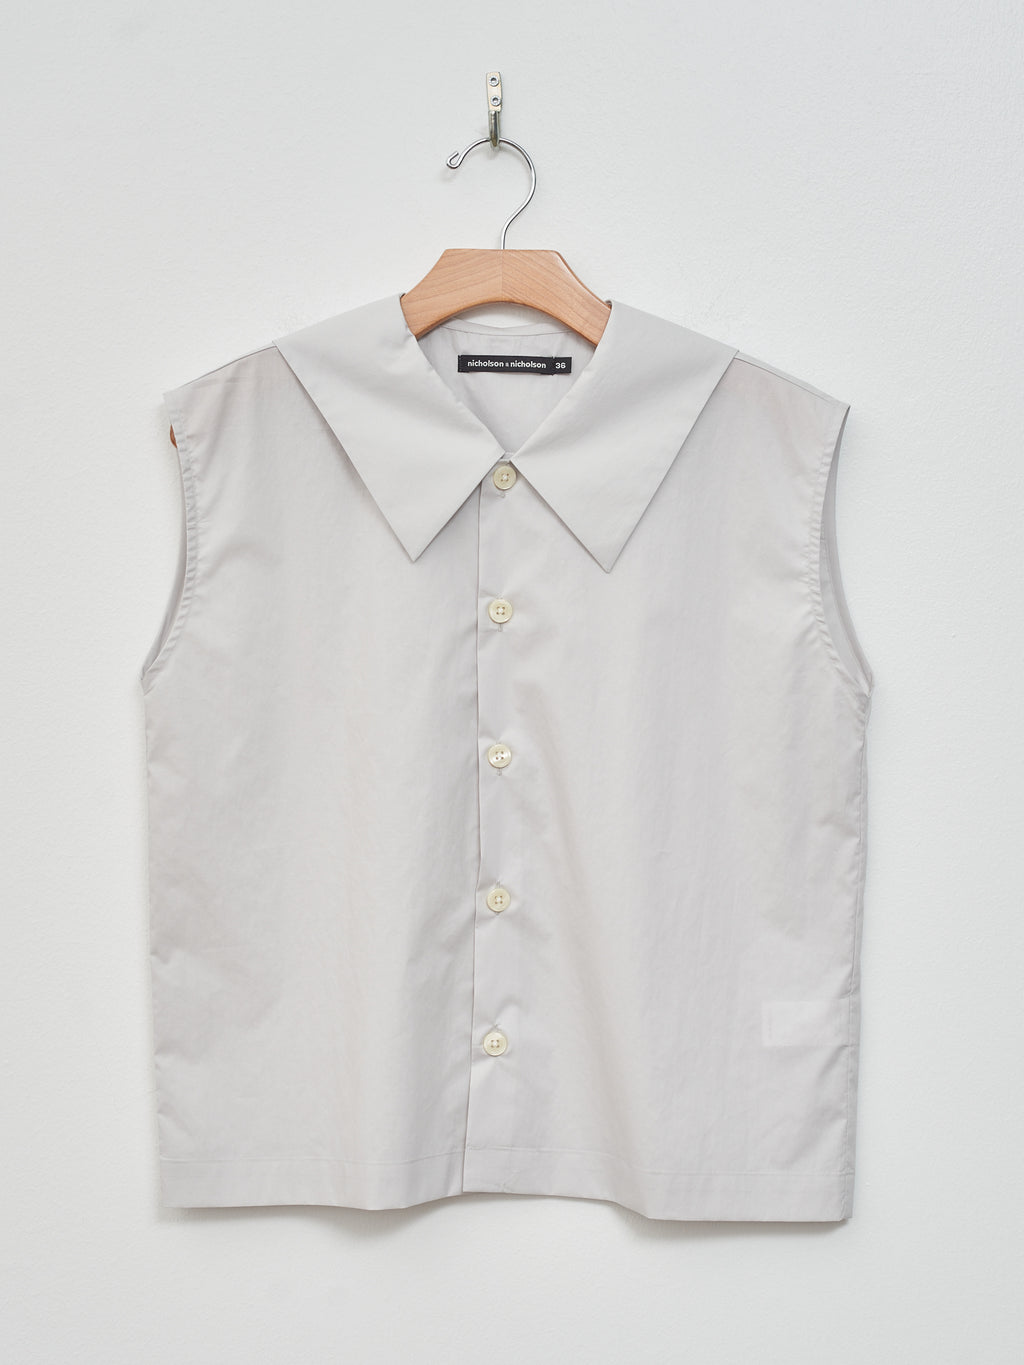 Namu Shop - Nicholson & Nicholson Lala Poplin Shirt - Light Gray